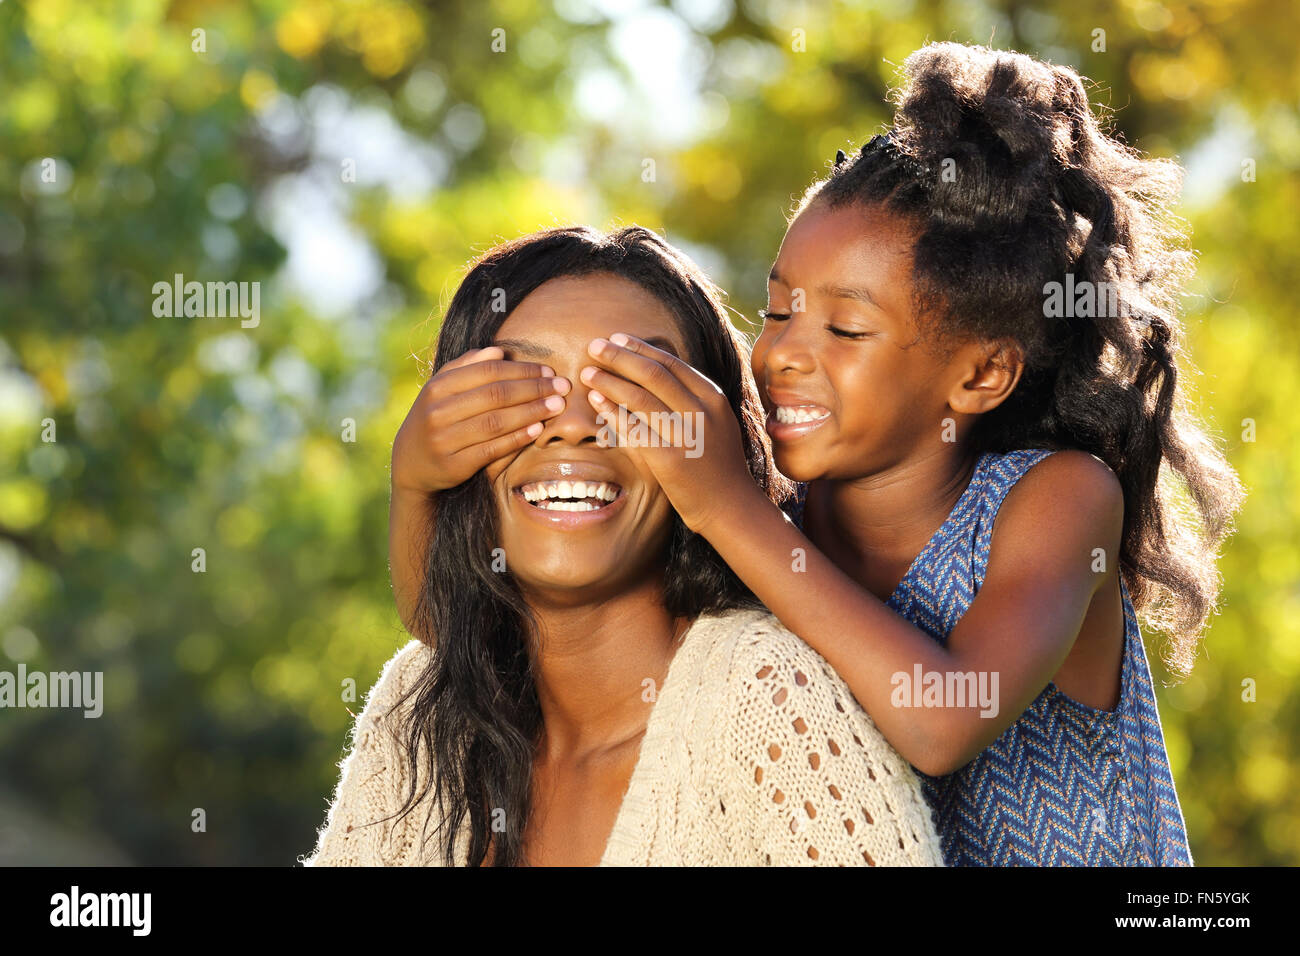 Mother and child heaving fun playing peekaboo Stock Photo